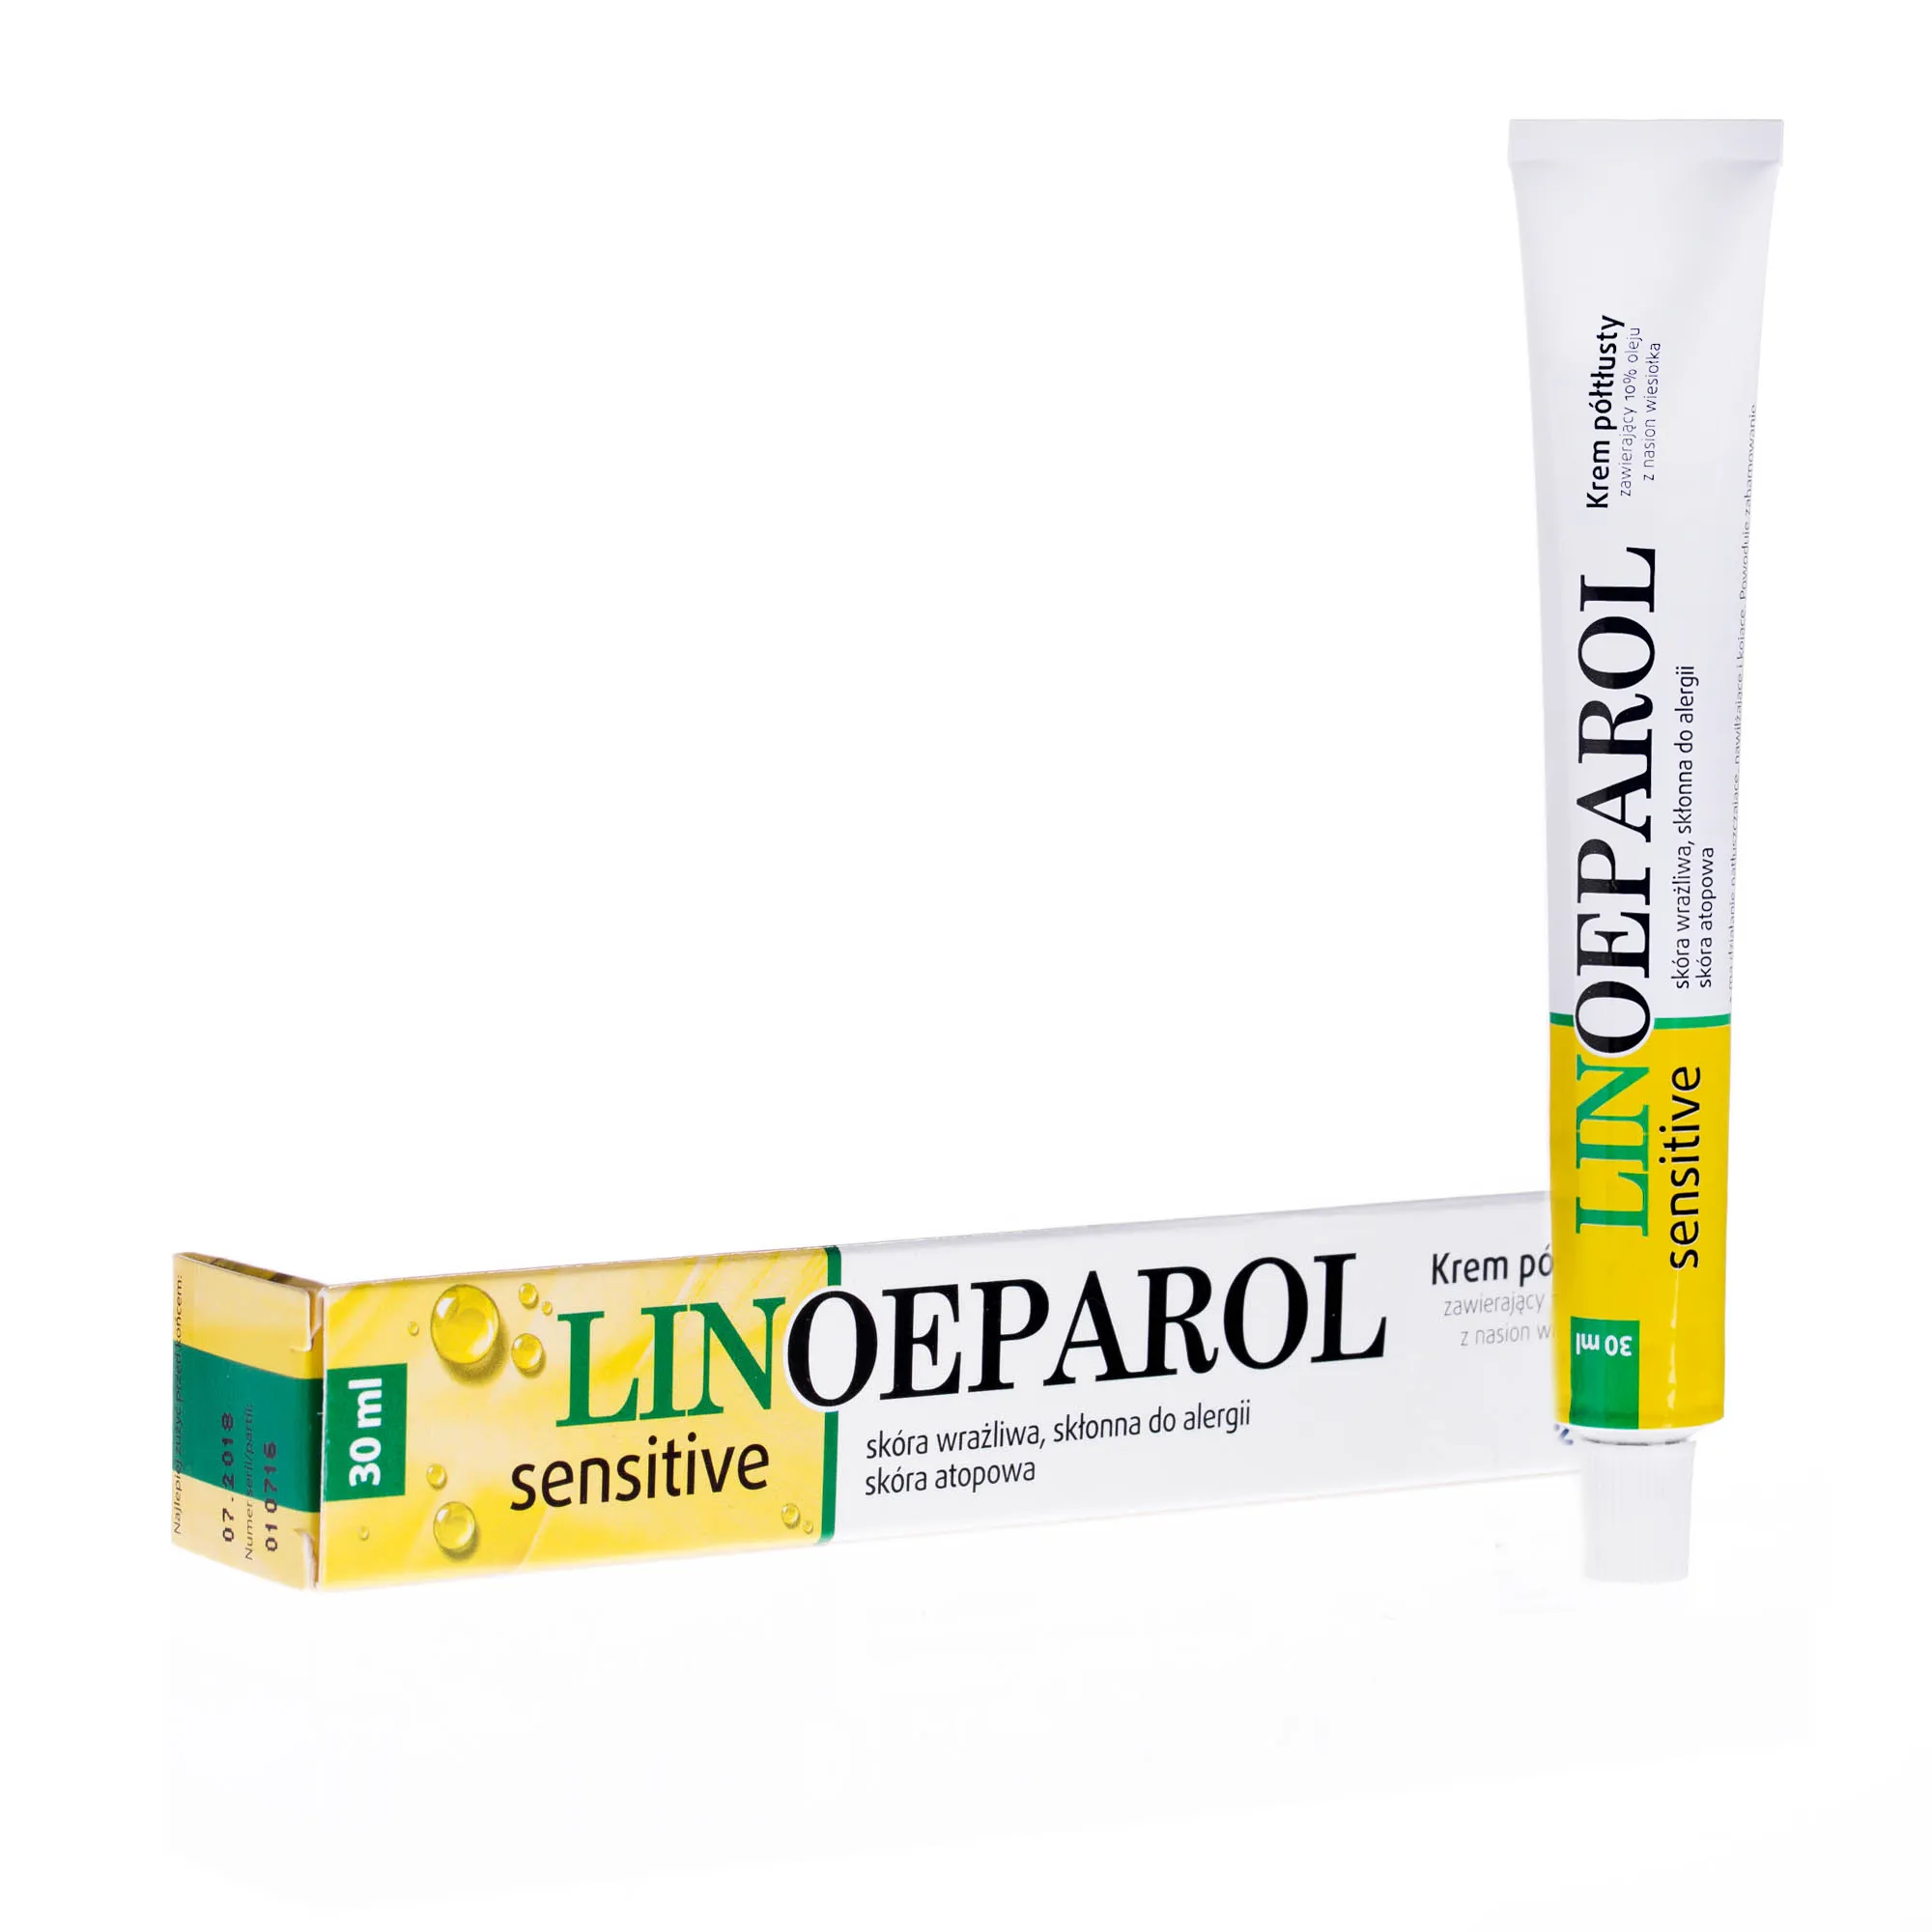 Linoeparol Sensitive, krem półtłusty do skóry wrażliwej, skłonnej do alergii, 30 ml 